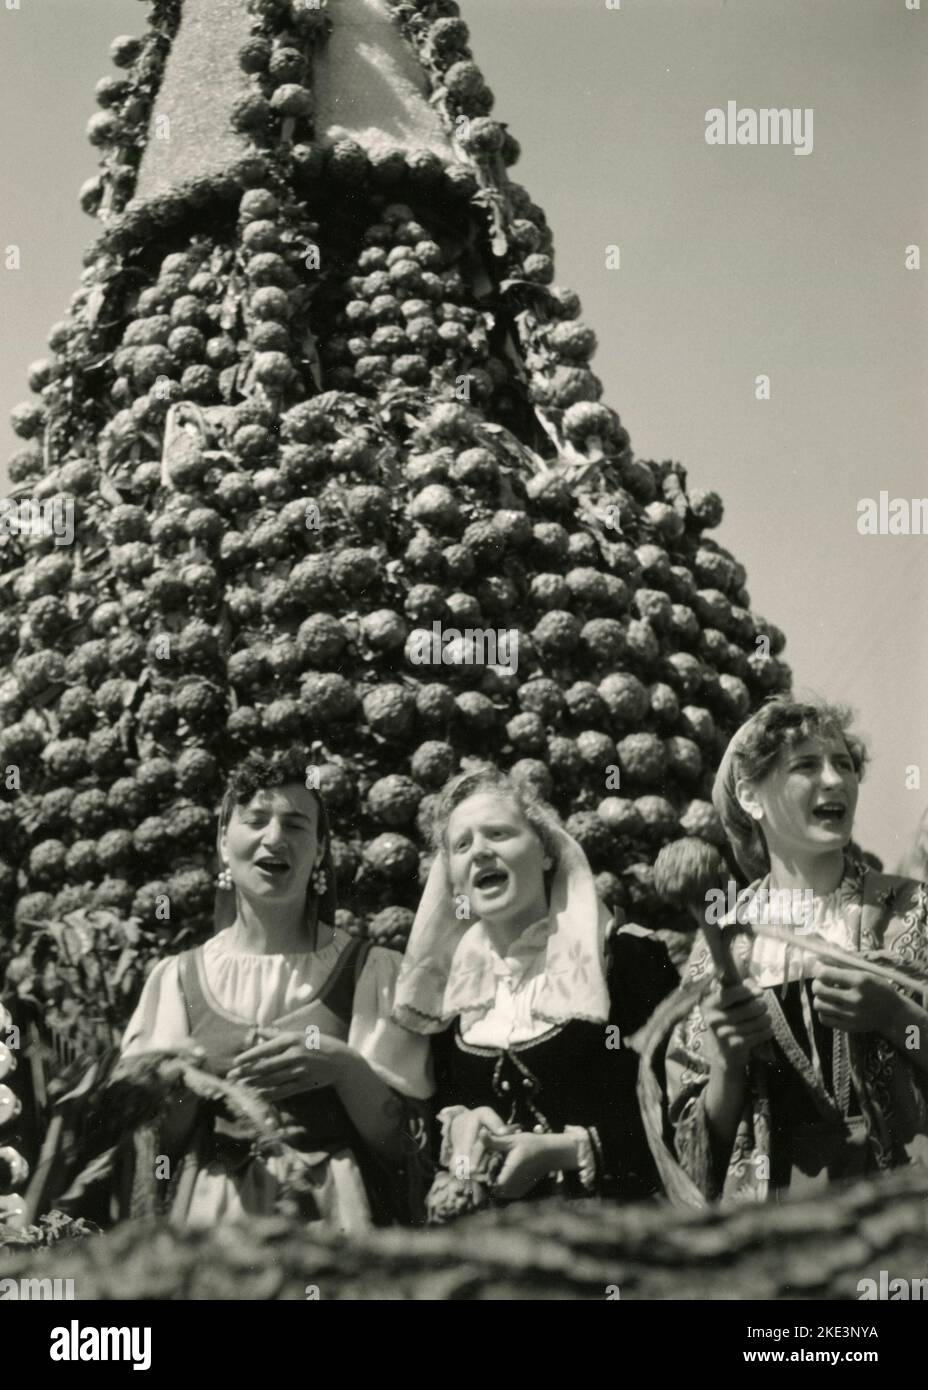 The traditional Sagra dei Carciofi, Artichok Festival in Ladispoli, Italy 1950s Stock Photo